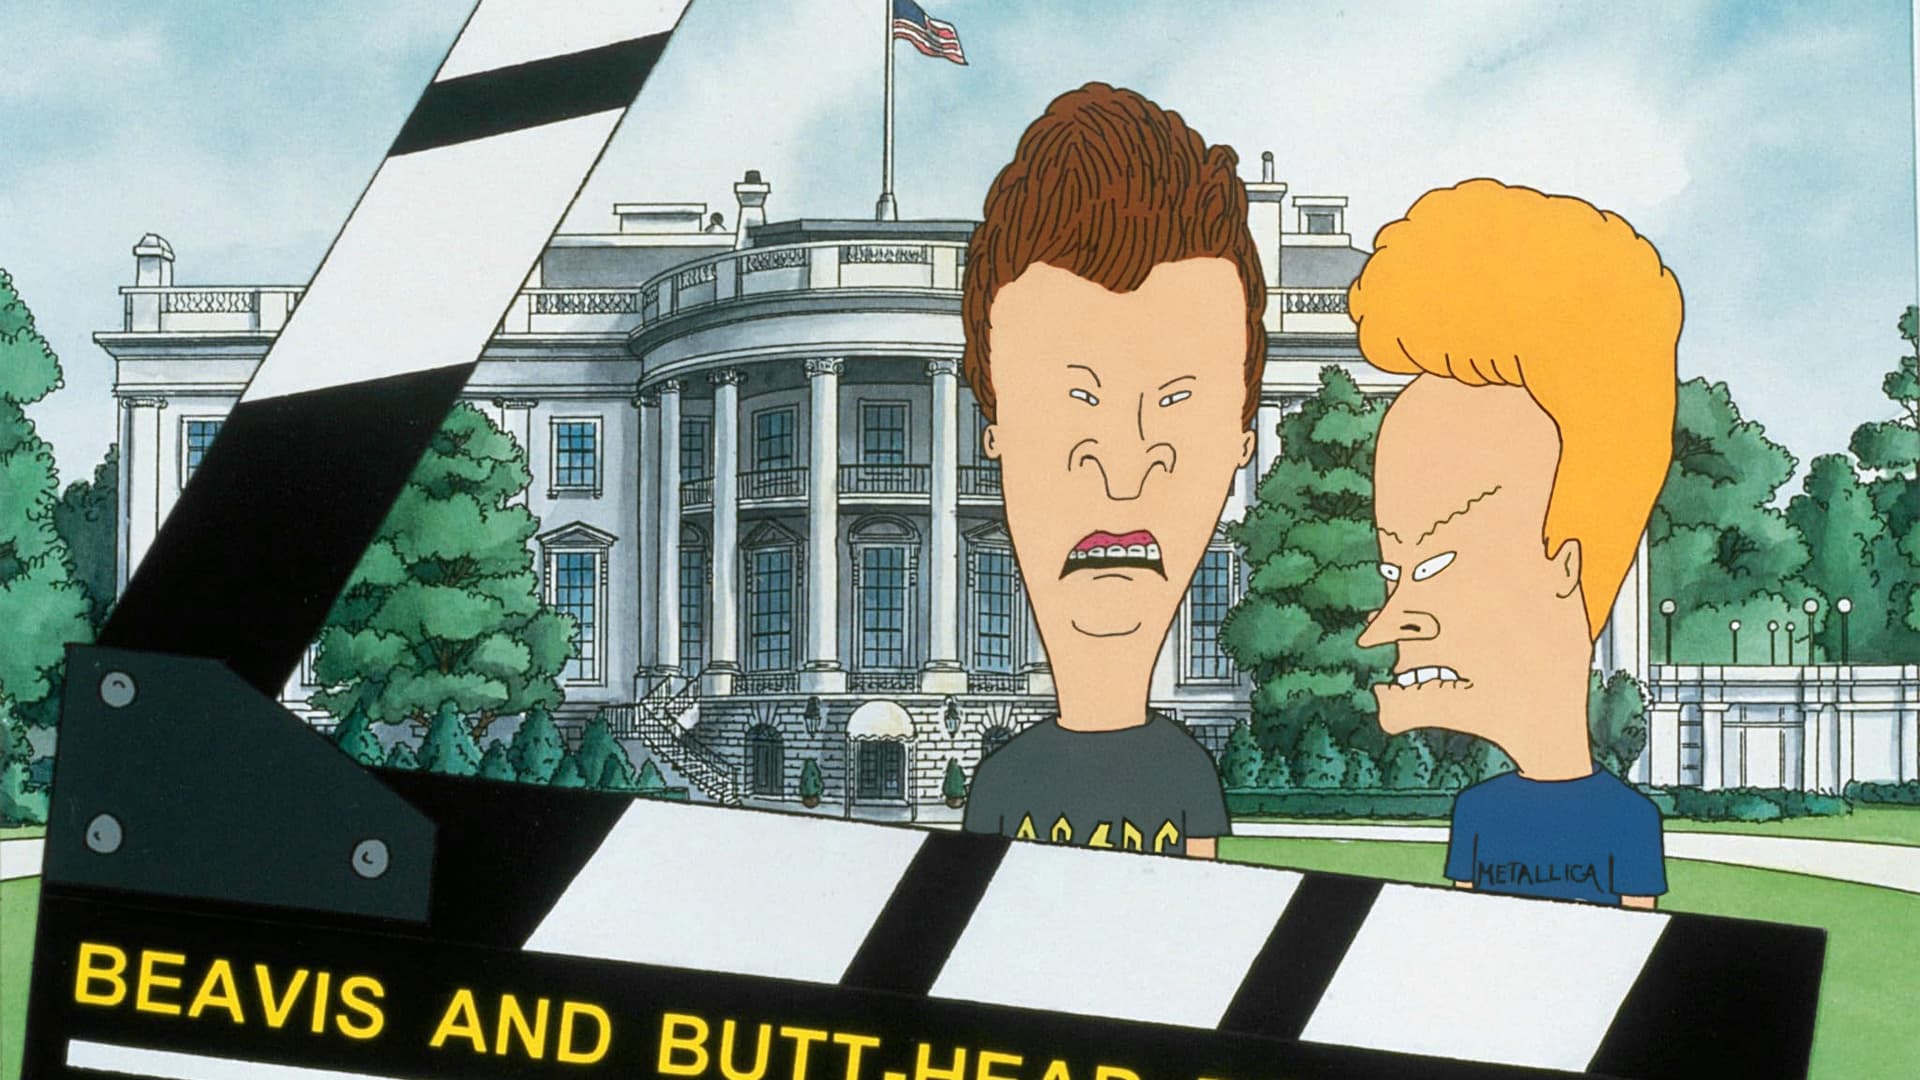 Beavis and Butt-Head Do America (1996)